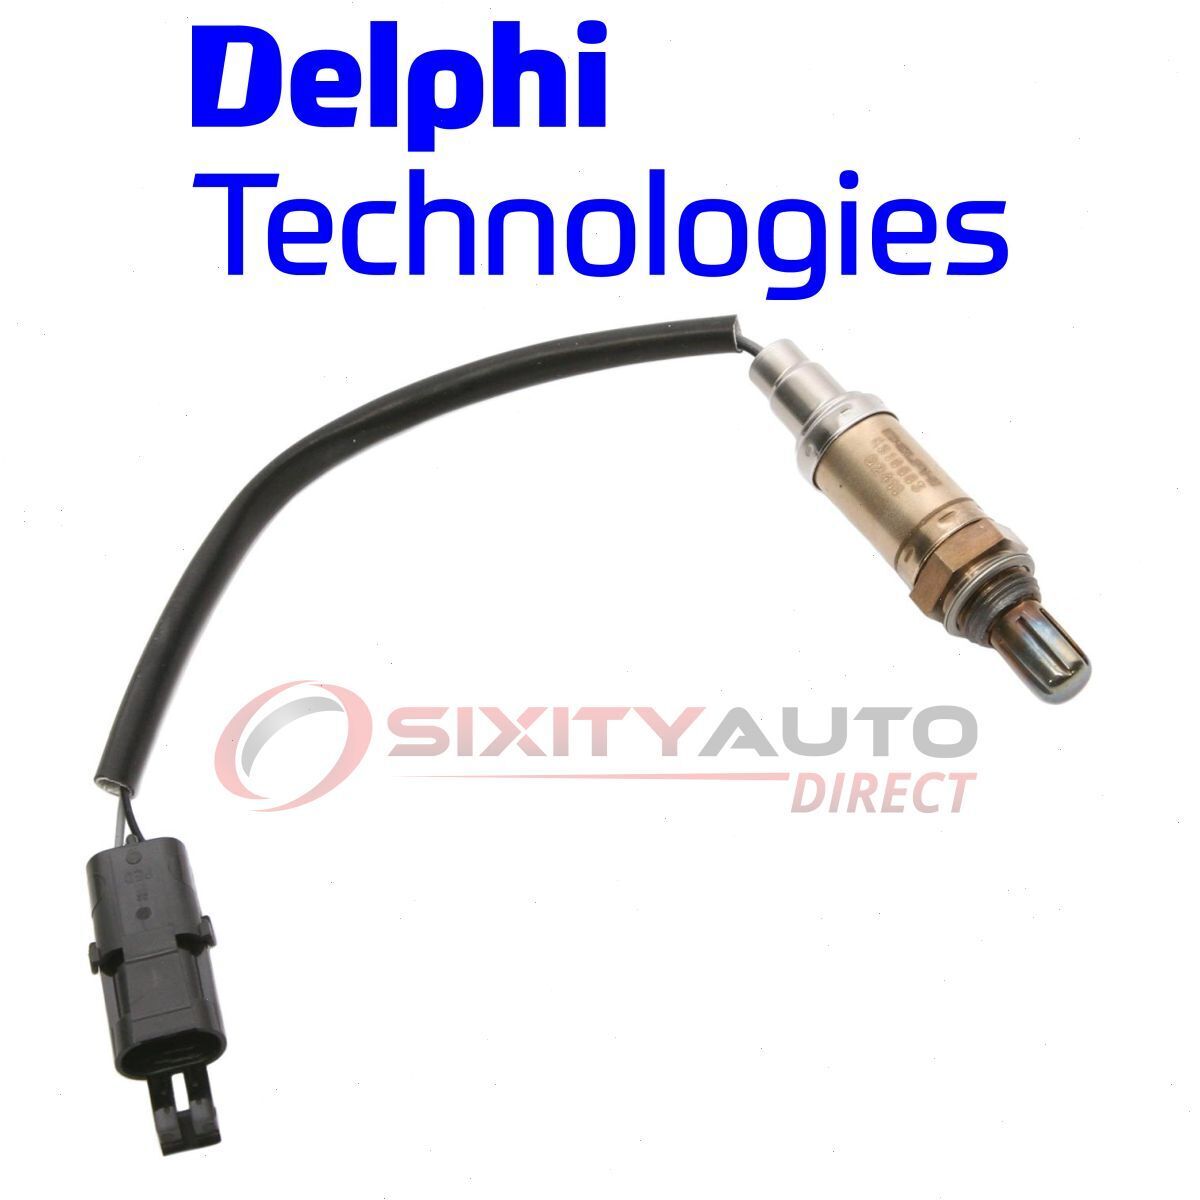 Delphi Upstream Oxygen Sensor for 1999-2002 Daewoo Leganza Exhaust Emissions ir